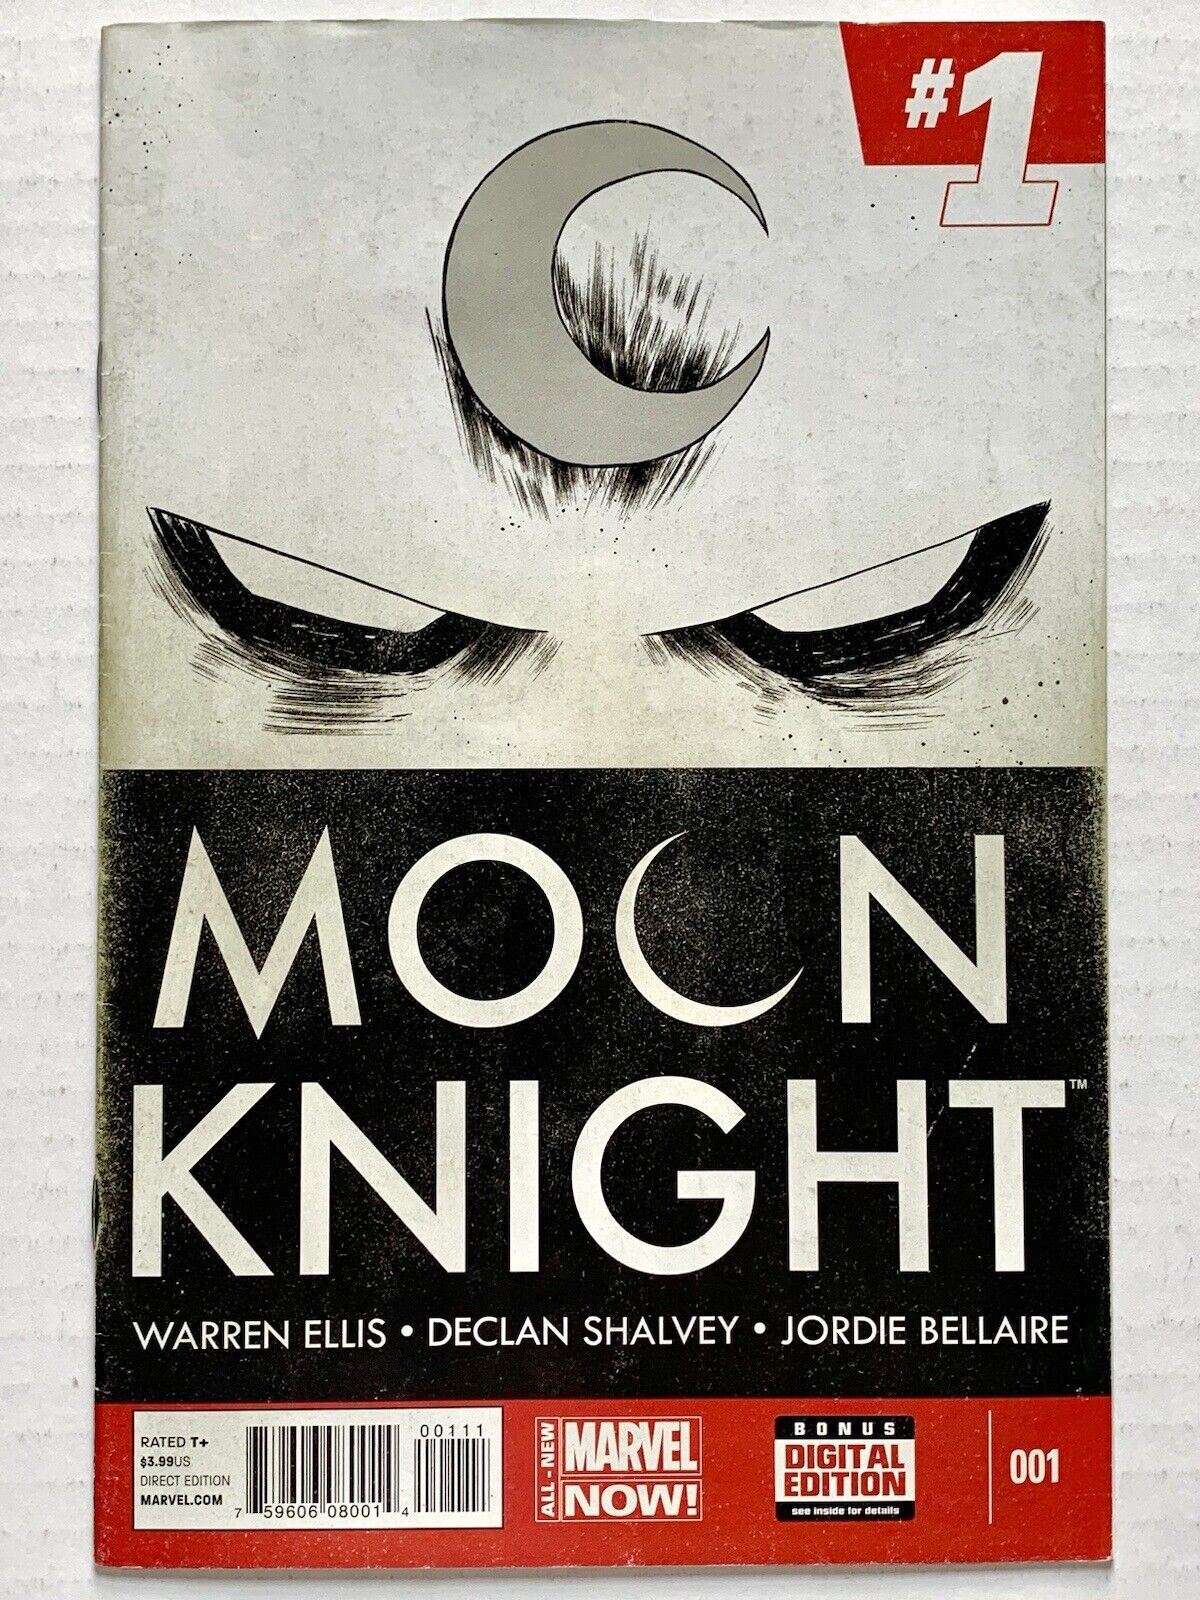 Moon Knight #1 (2014) Mr.Knight- Warren Ellis, Declan Shalvey (VF/7.5) -VINTAGE